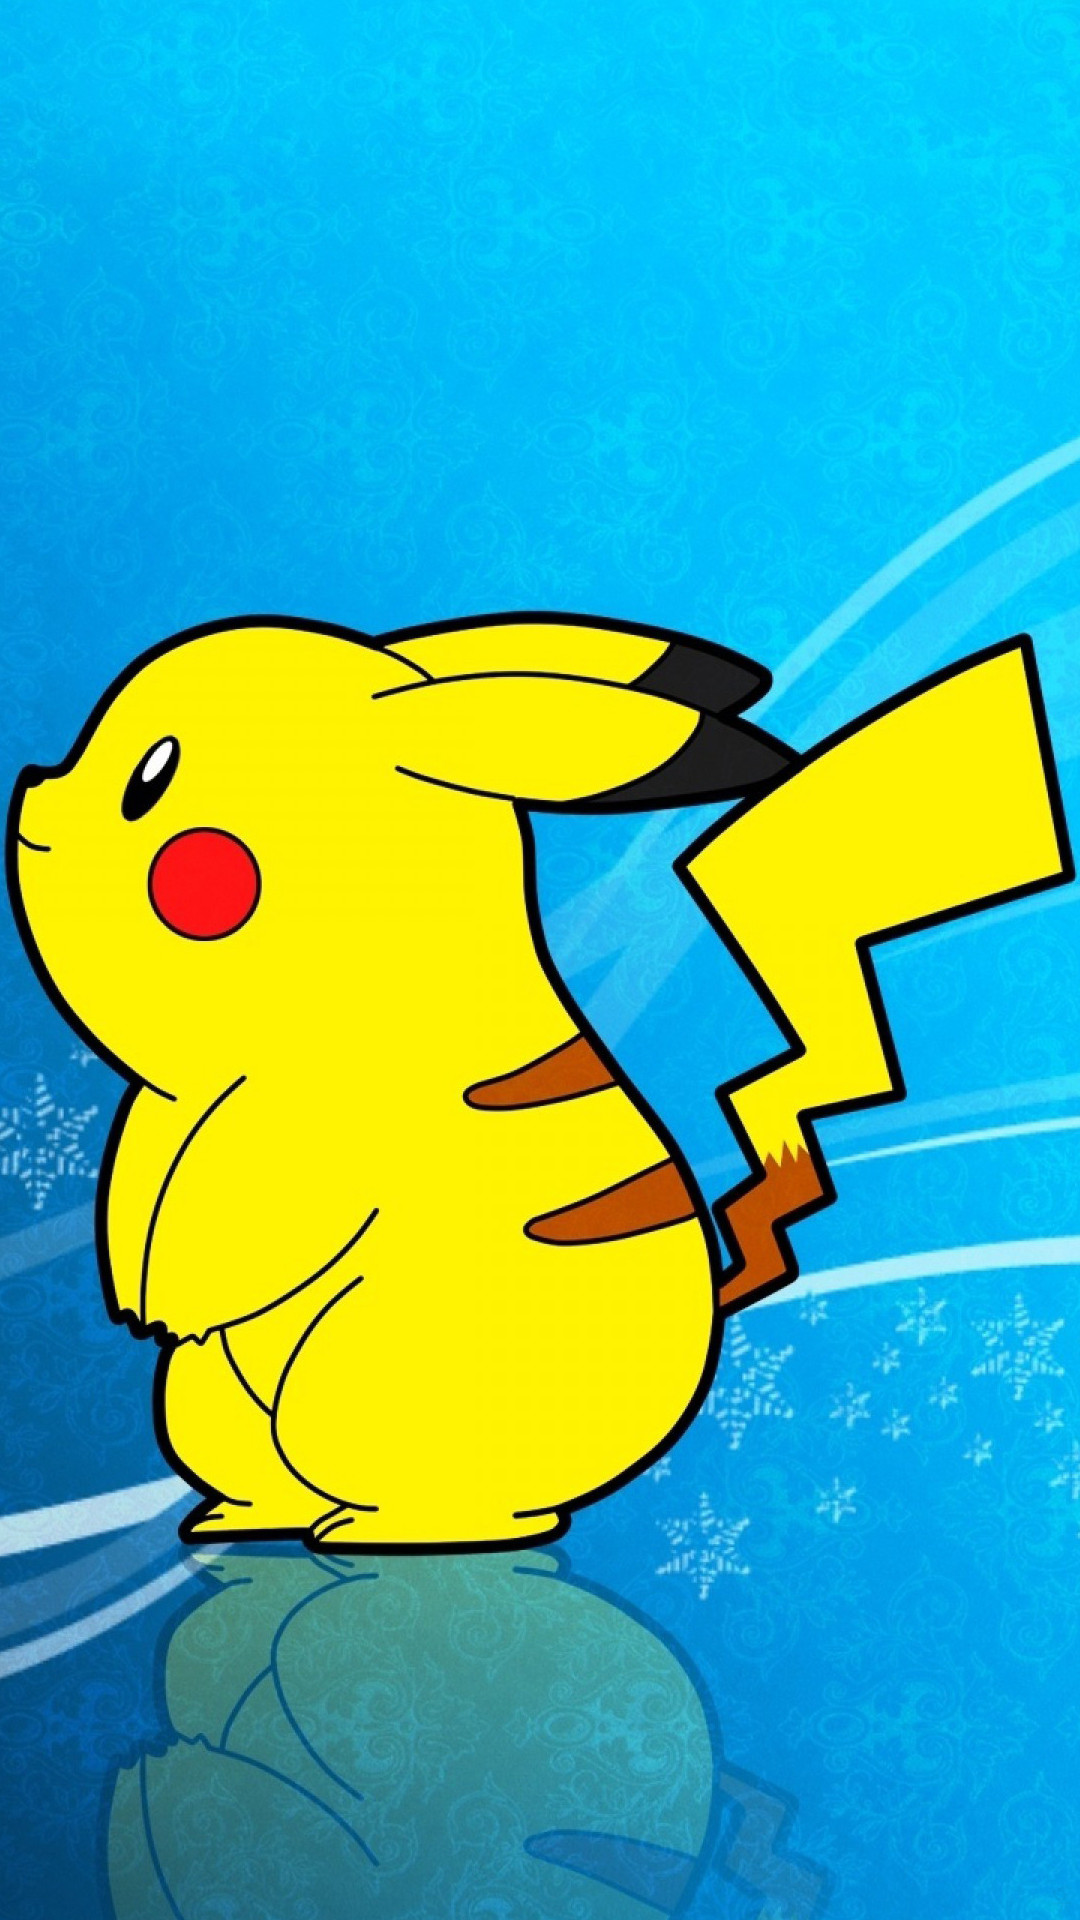 Pikachu wallpaper . iPhone 7